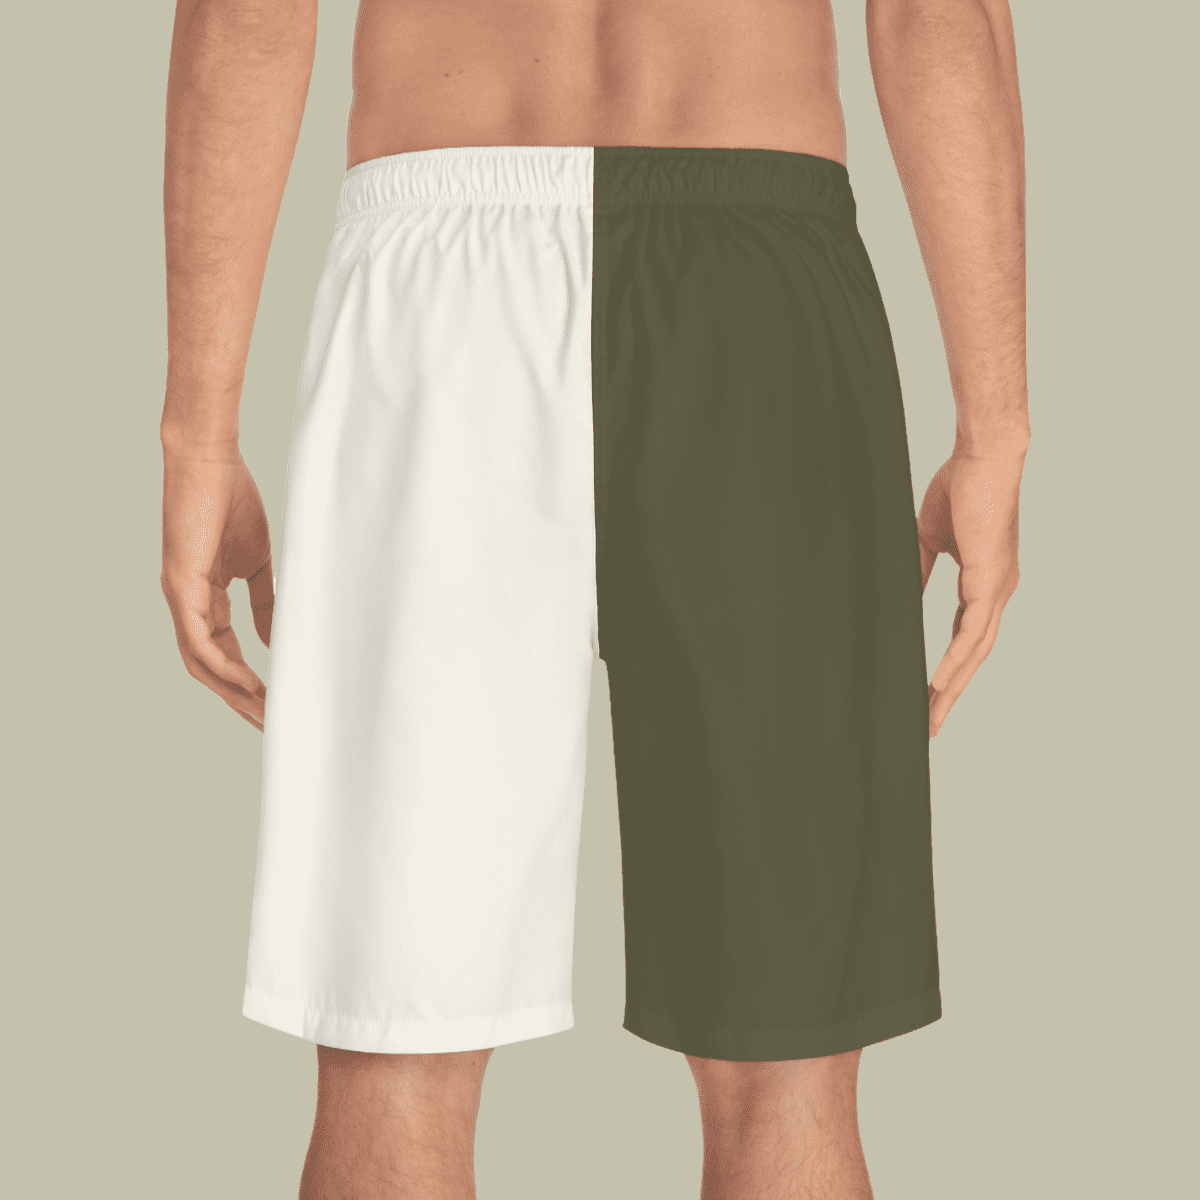 Men's Khaki and Cream Board Shorts